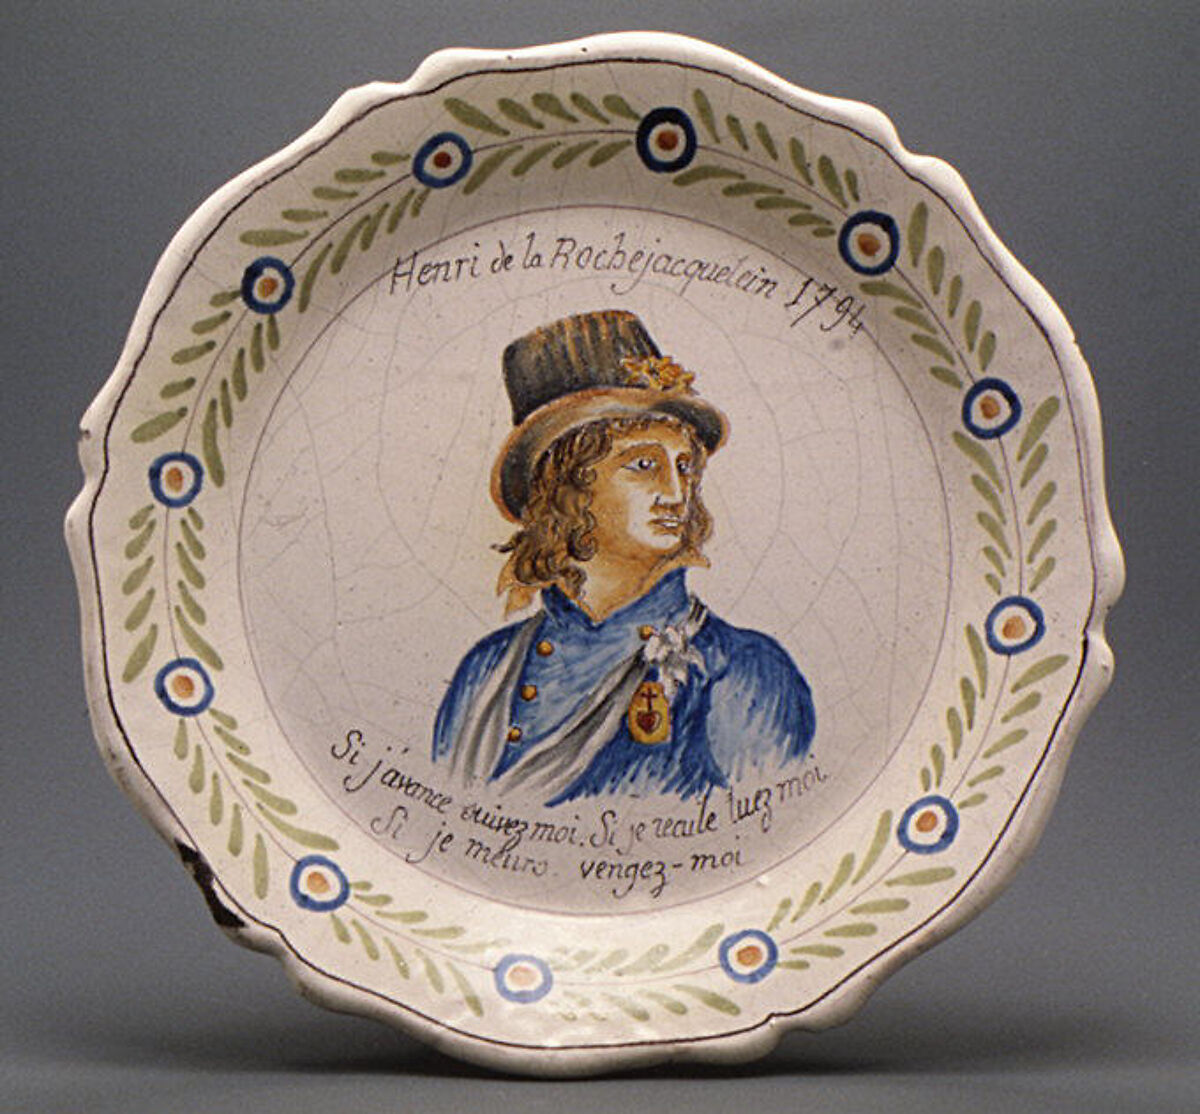 Plate with portrait of Henri de Verger, Comte de la Rochejaquelein, Faience (tin-glazed earthenware), French, Nevers 